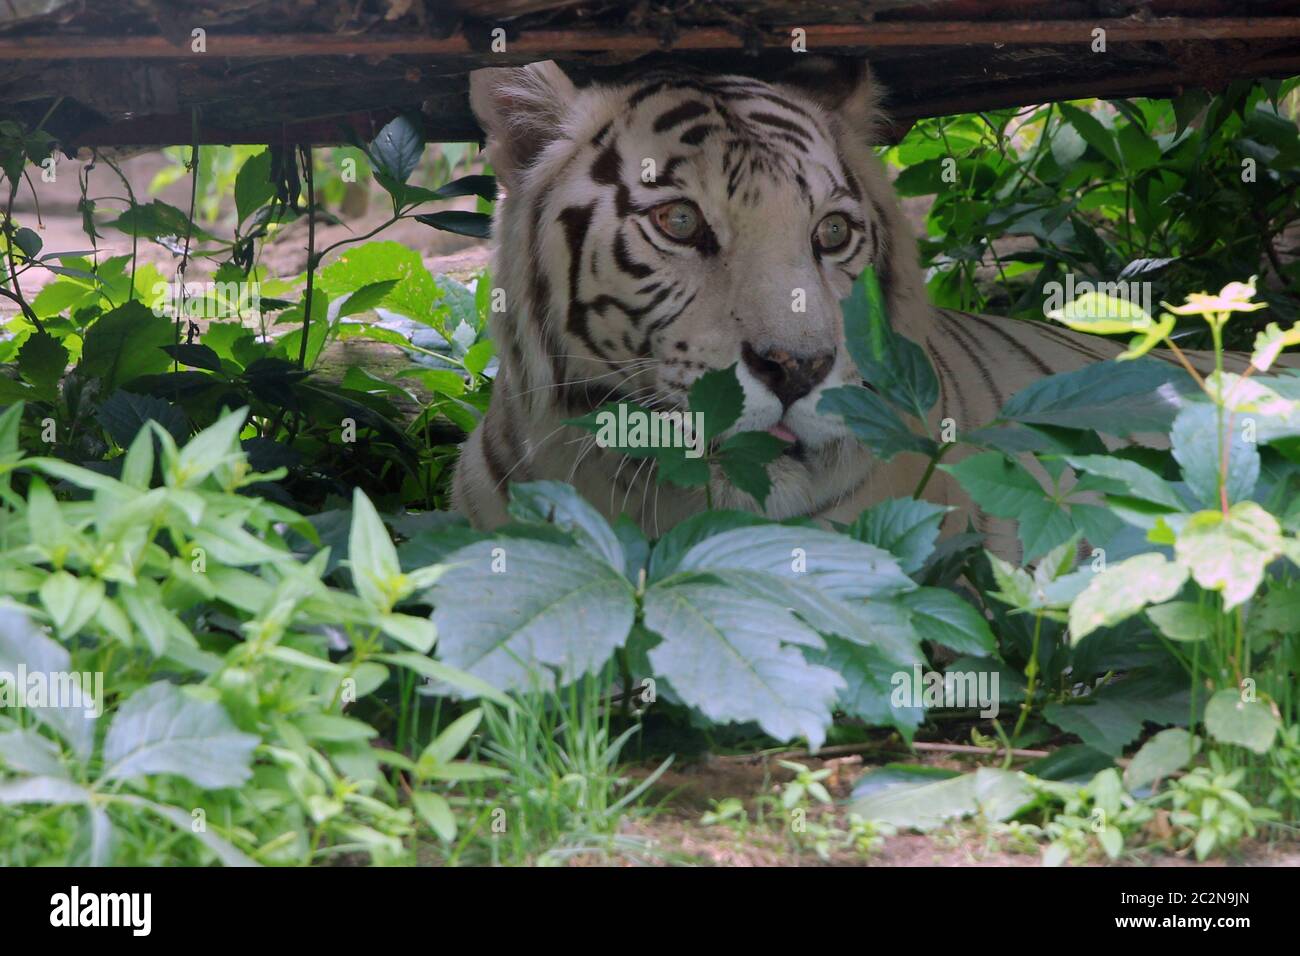 White tiger in the grass stalking prey. Stock Photo